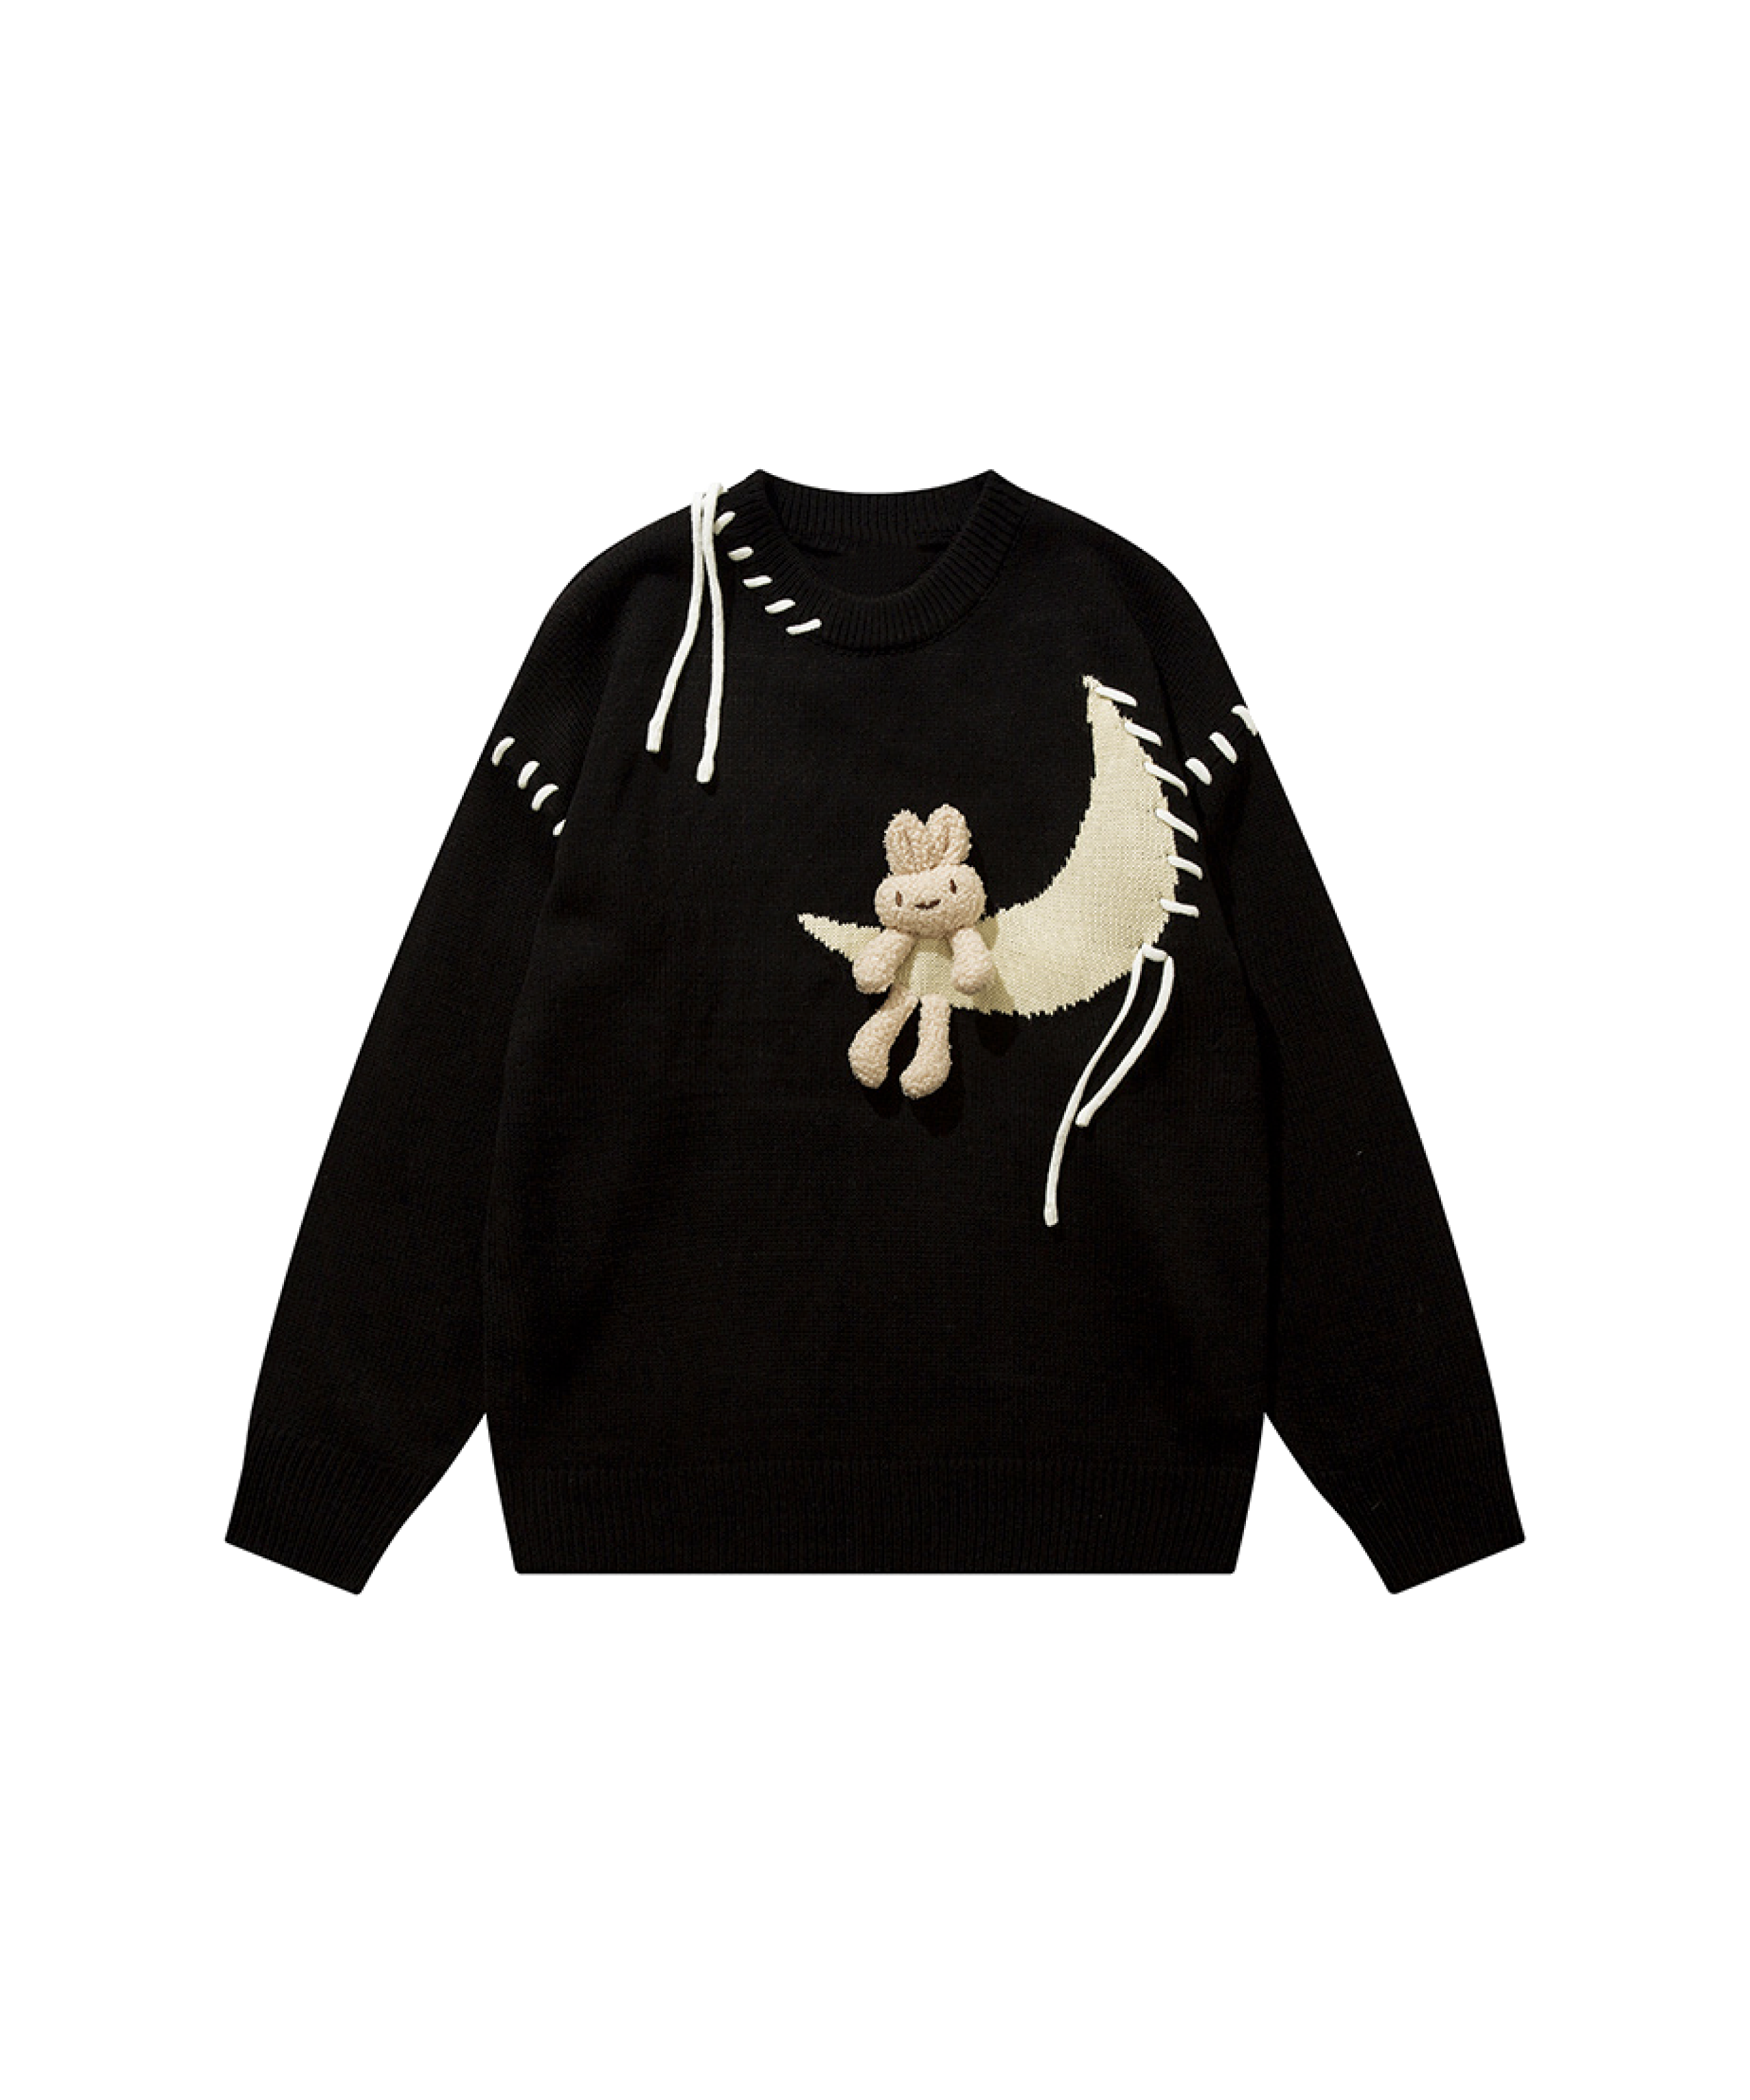 Cheerful Rabbit Toy Sweater